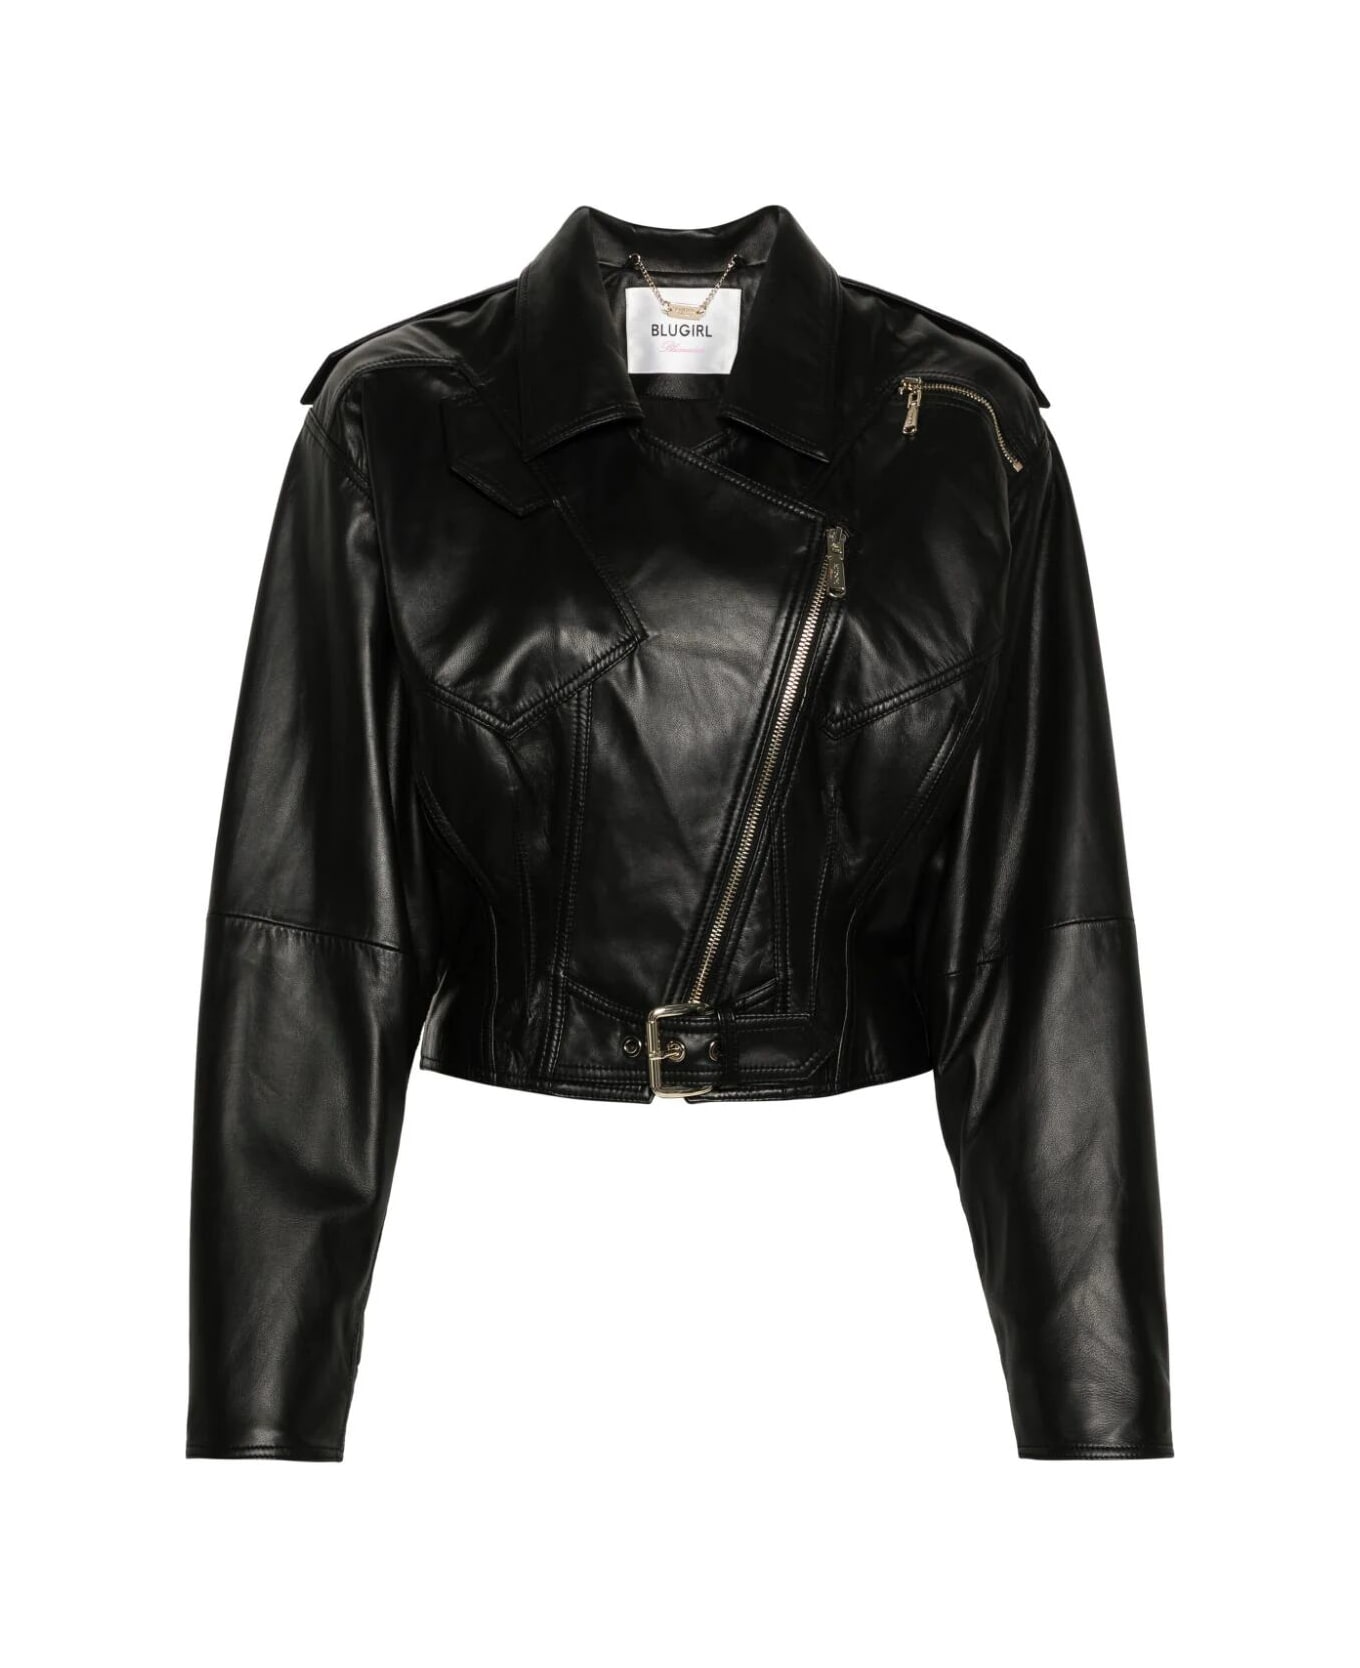 Blugirl Leather Jacket - Black